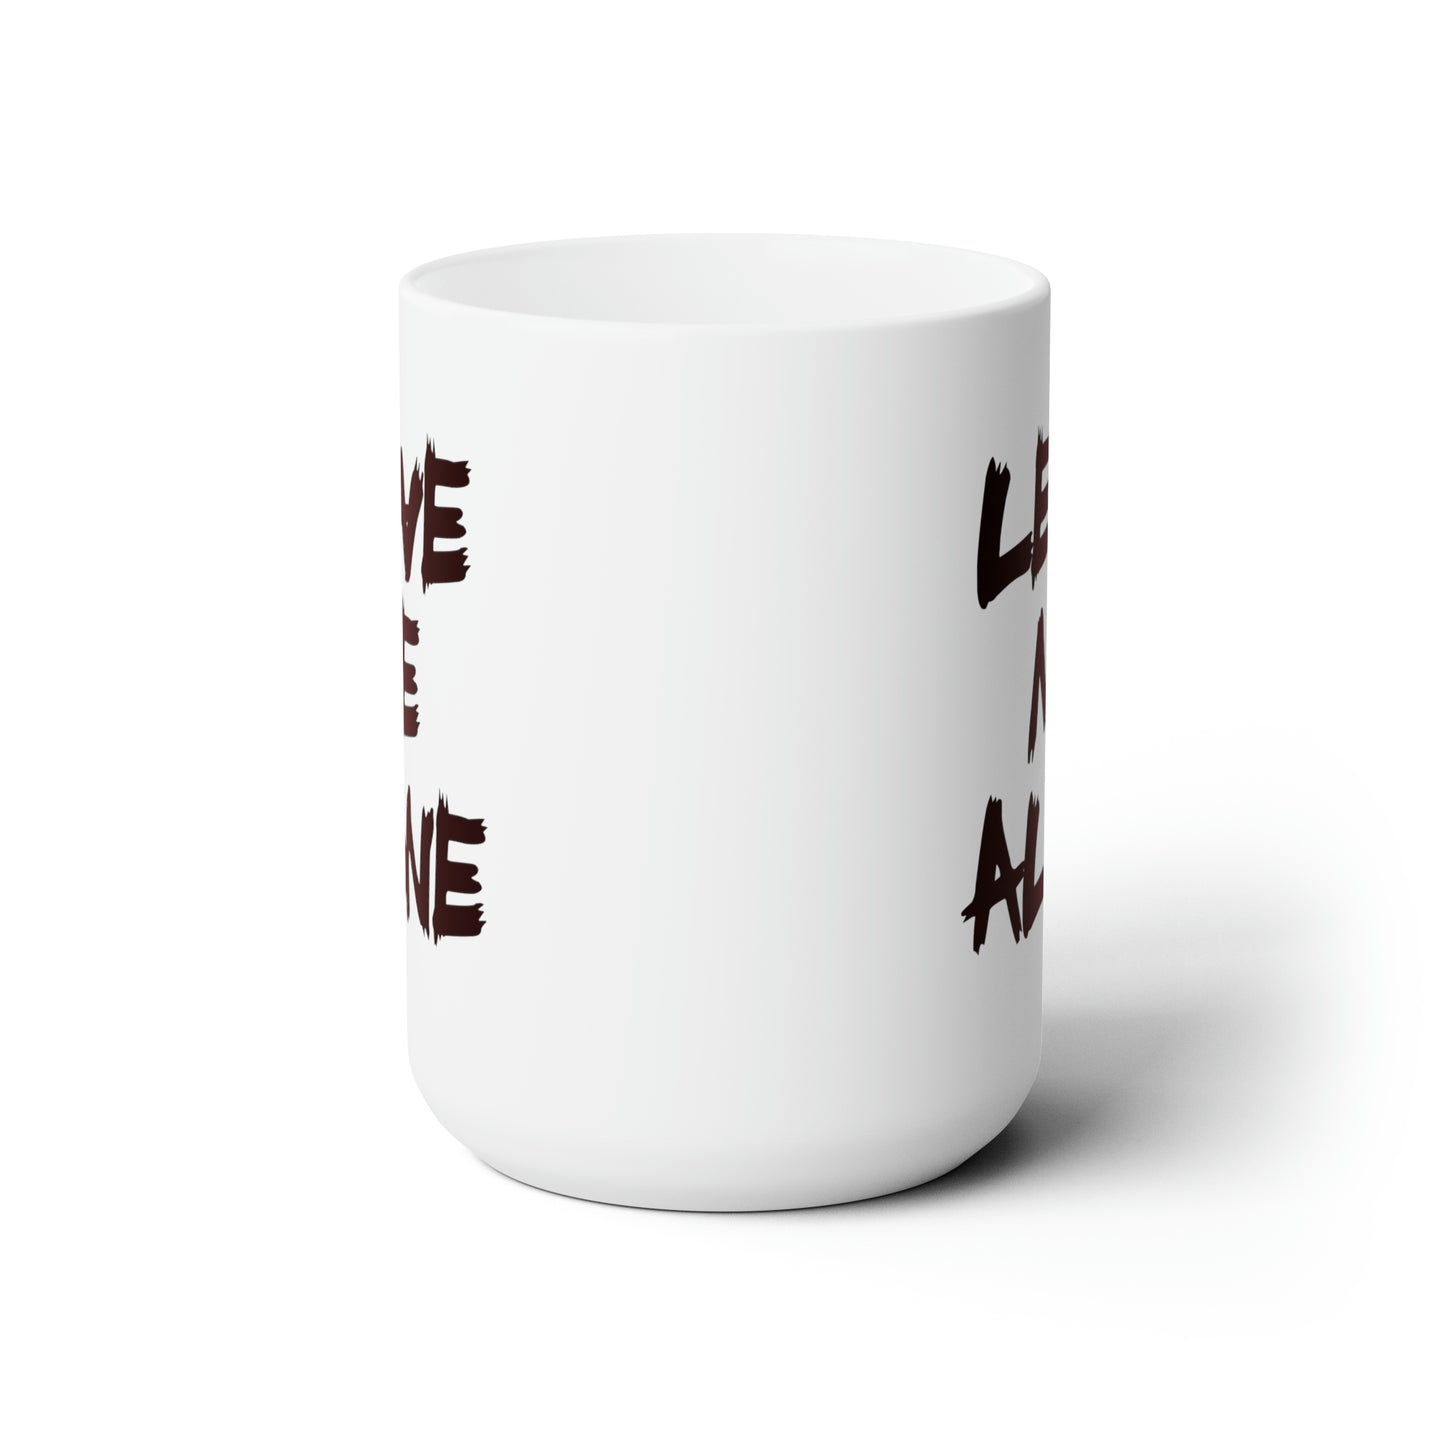 Leave me Alone - Coffee Mug